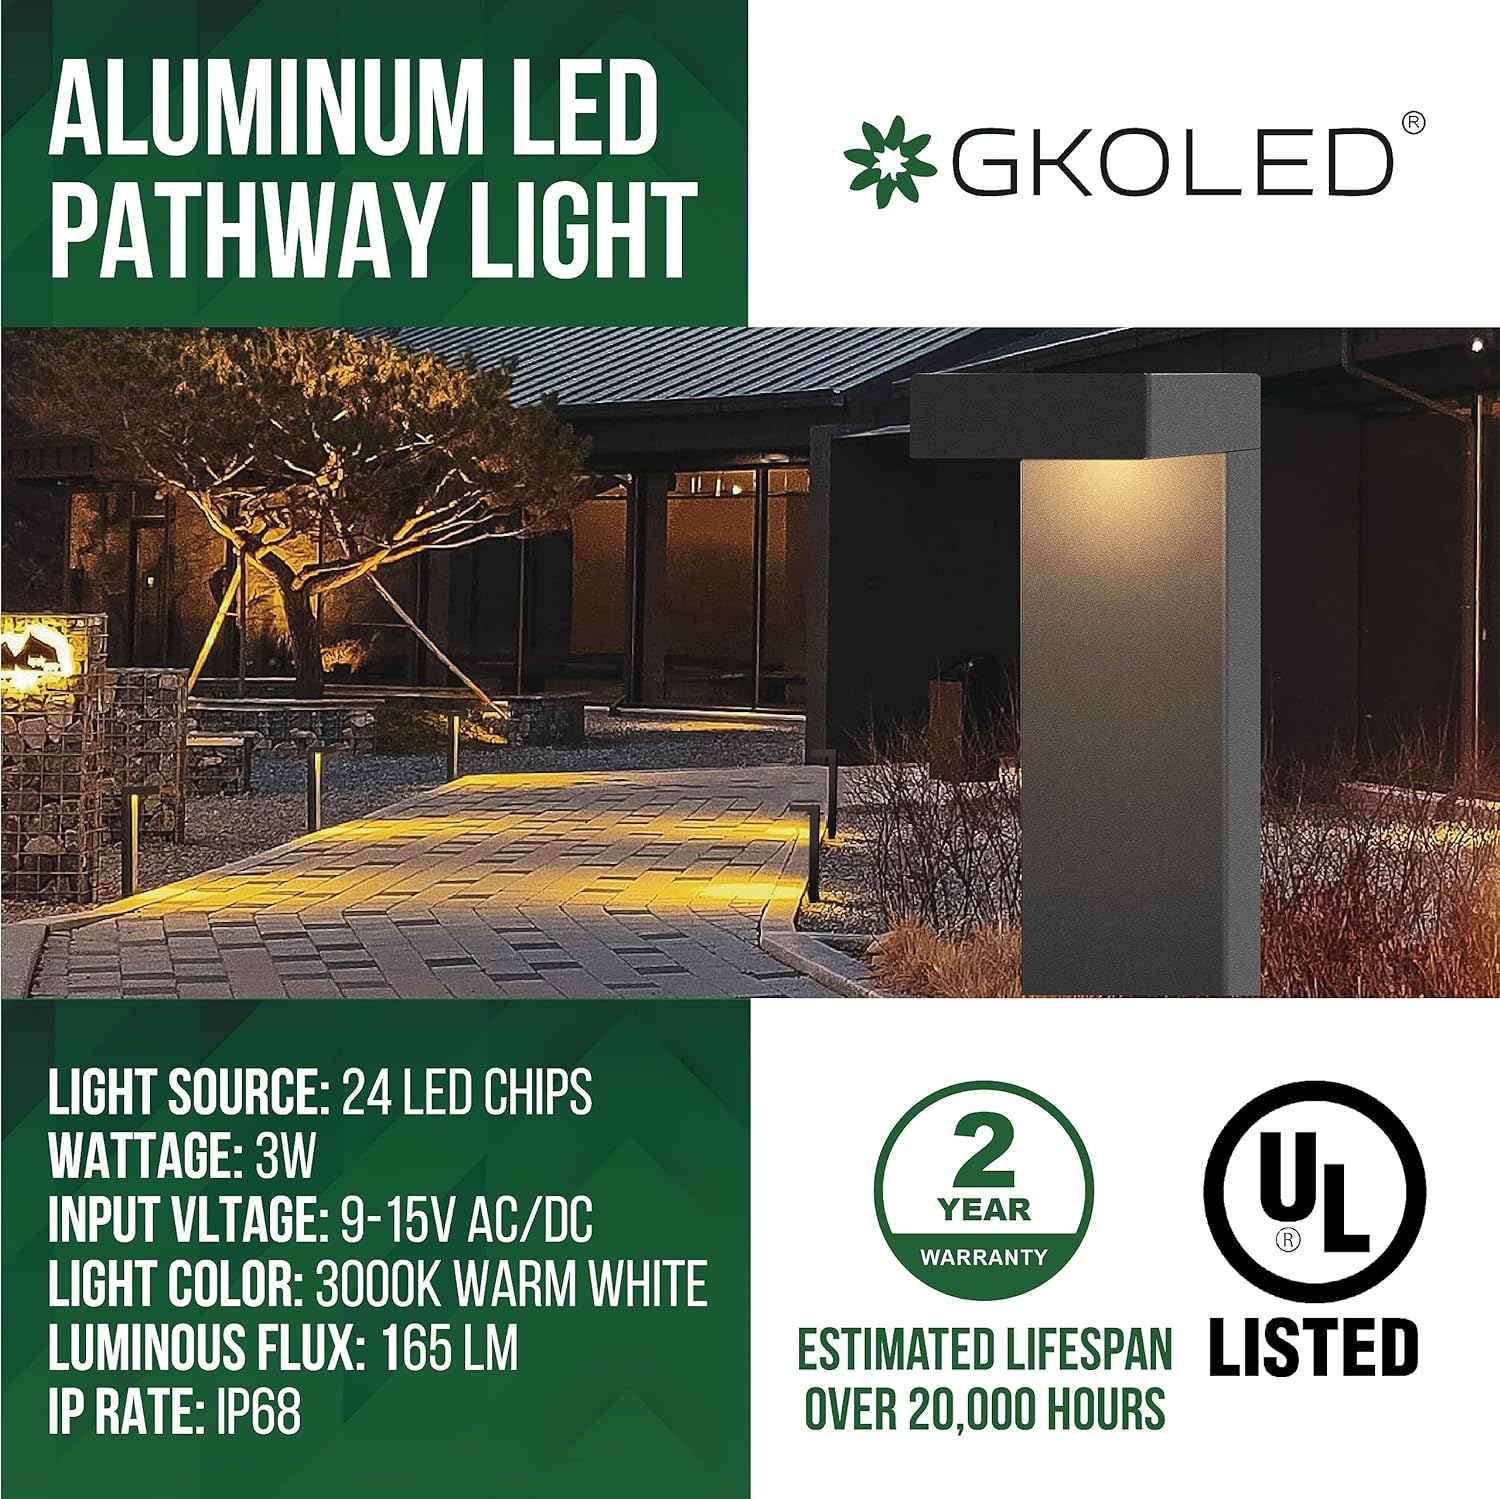 GKOLED Low Voltage Landscape Pathway Light Fixture Review